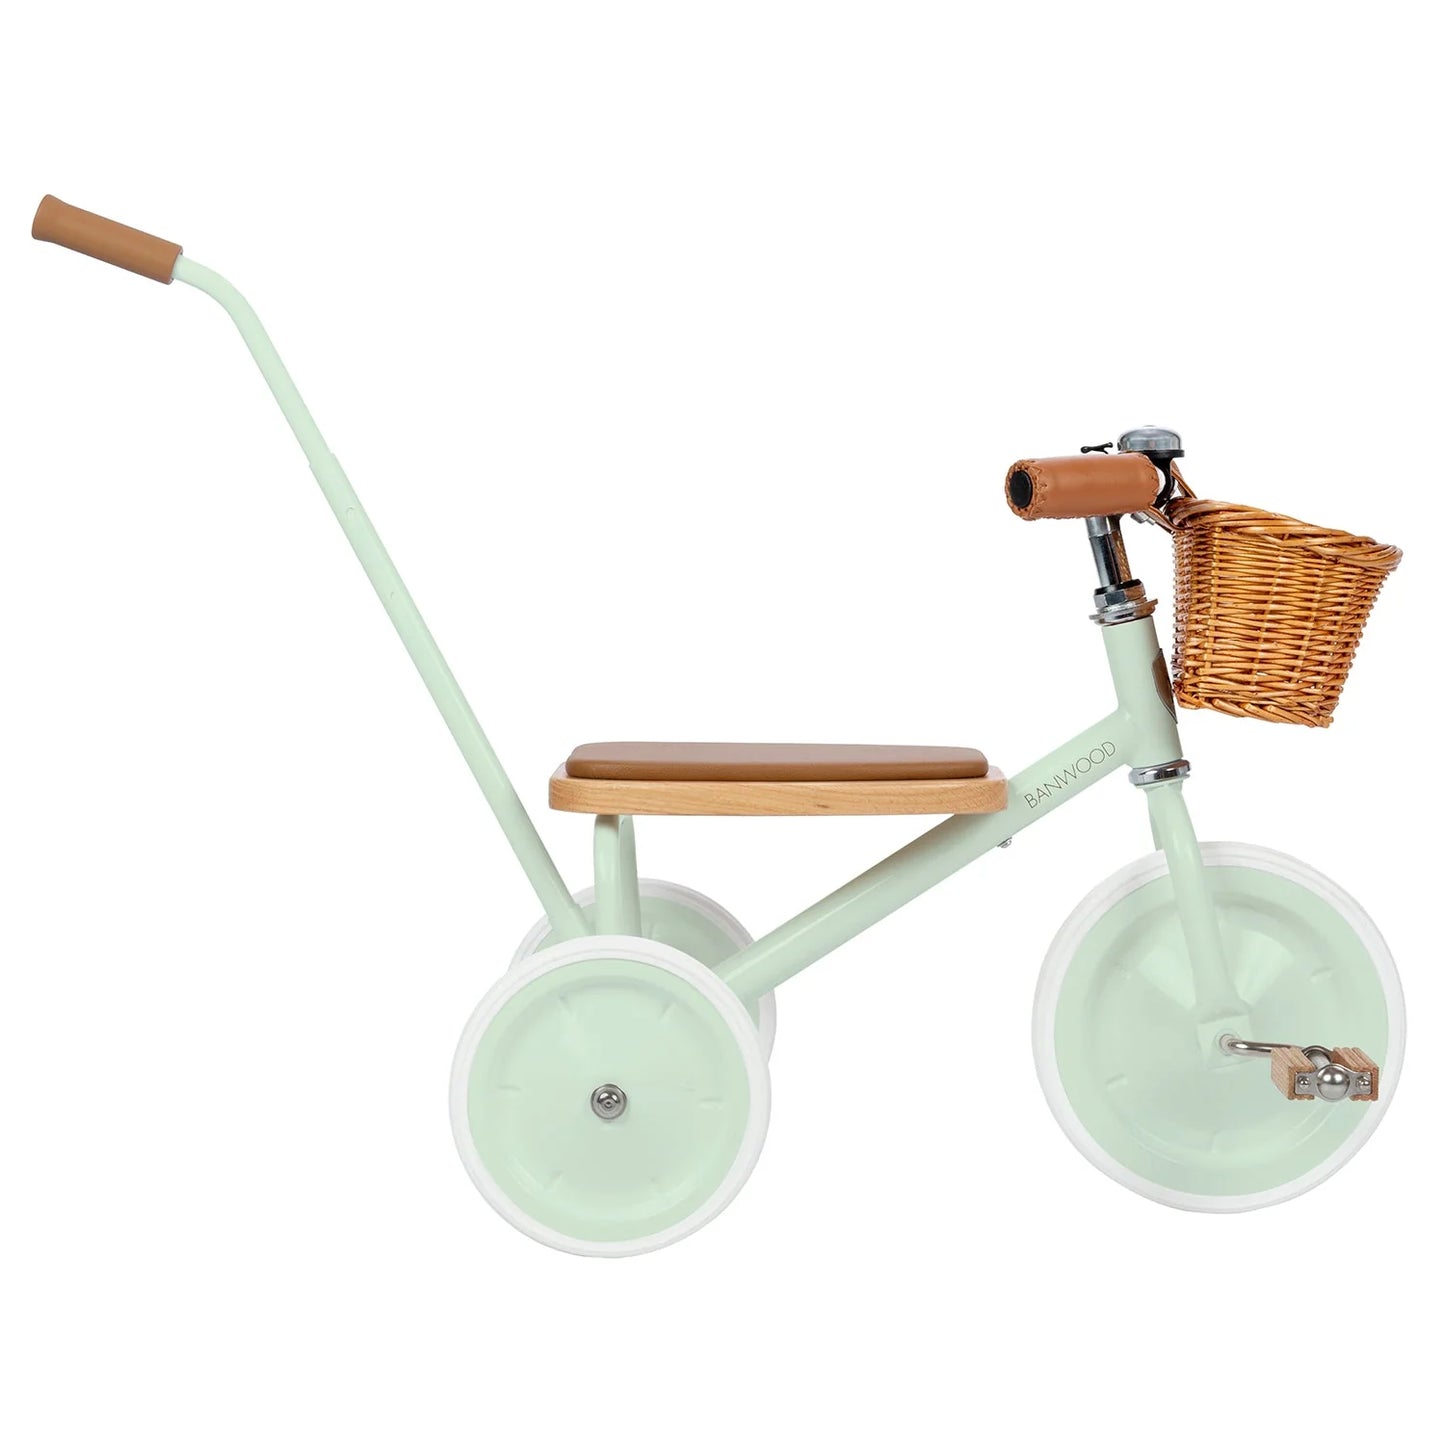 Banwood Bikes - Trike - Pale Mint